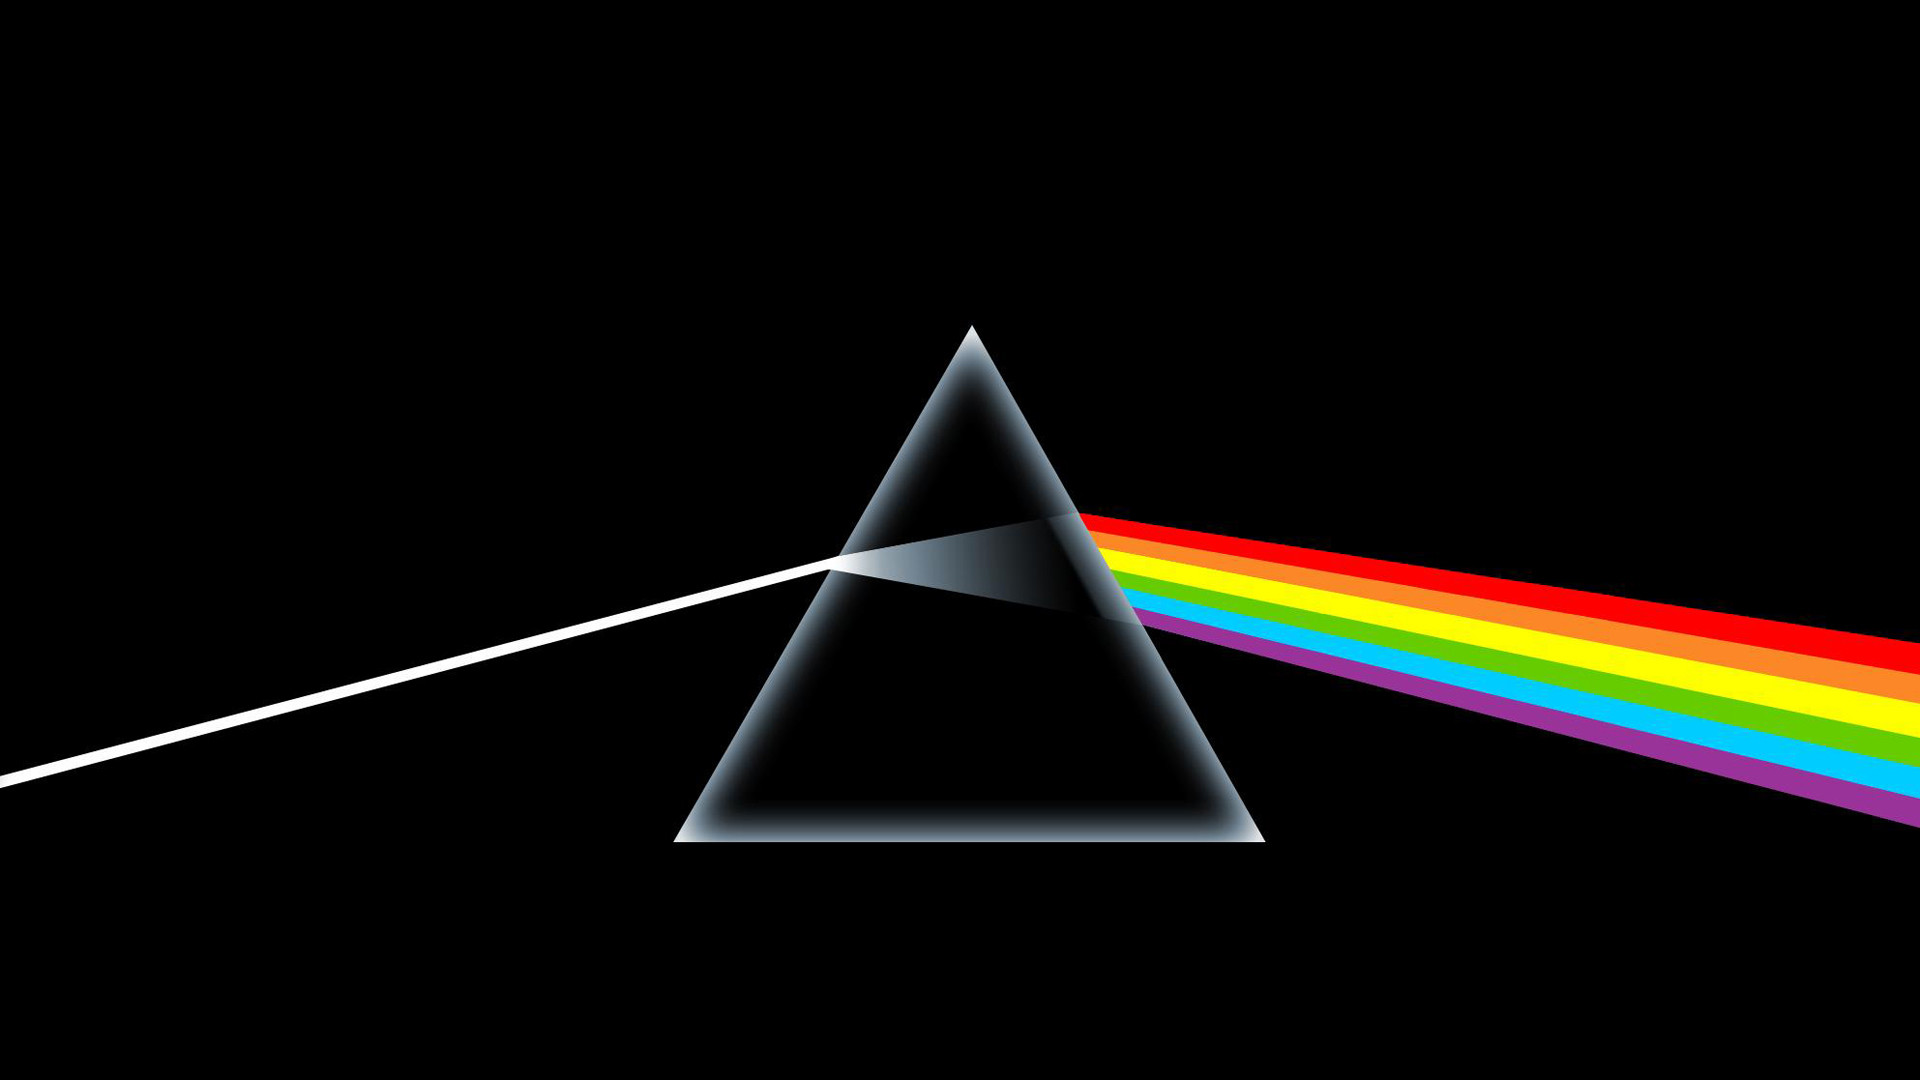 1920x1080 Pink Floyd Meddle Cover Art Wallpaper Original Pink Floyd Dark Side Of The  Moon Full HD Wallpaper ...